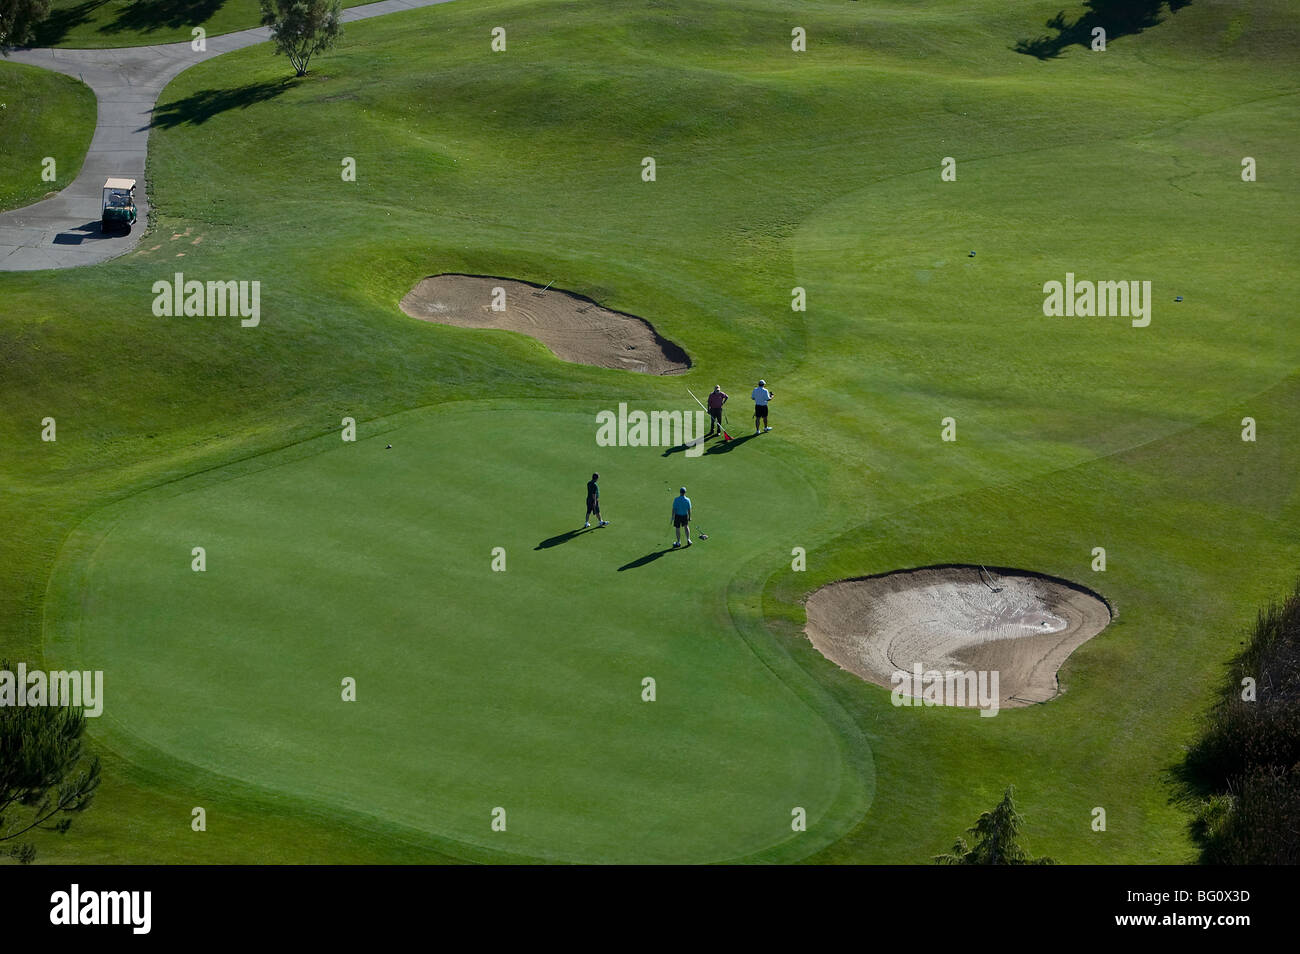 Luftaufnahmen über vier Golfer setzen auf grünen Hahn laufen Golfplatz Petaluma California Sonoma County Stockfoto